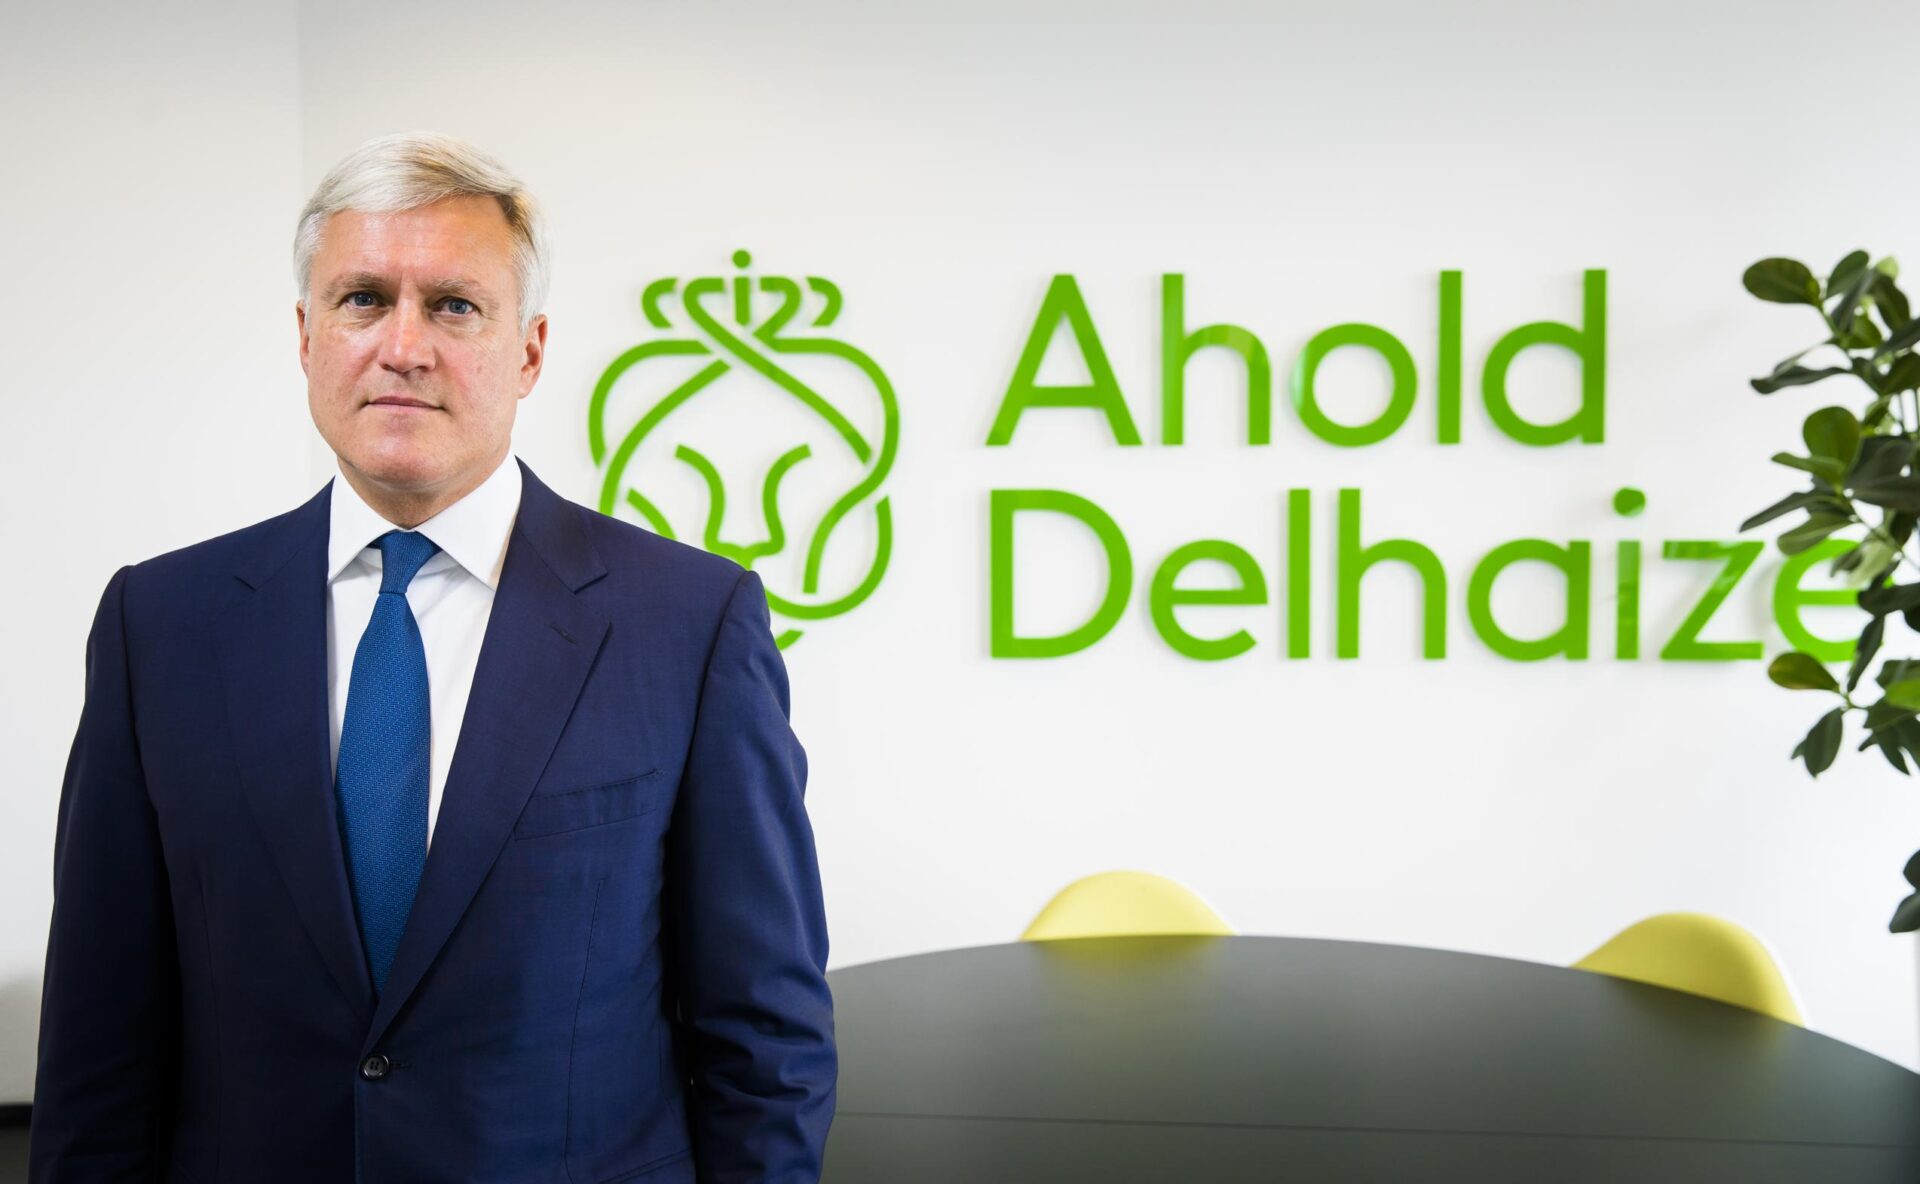 Ahold Delhaize wil verder met CEO Frans Muller